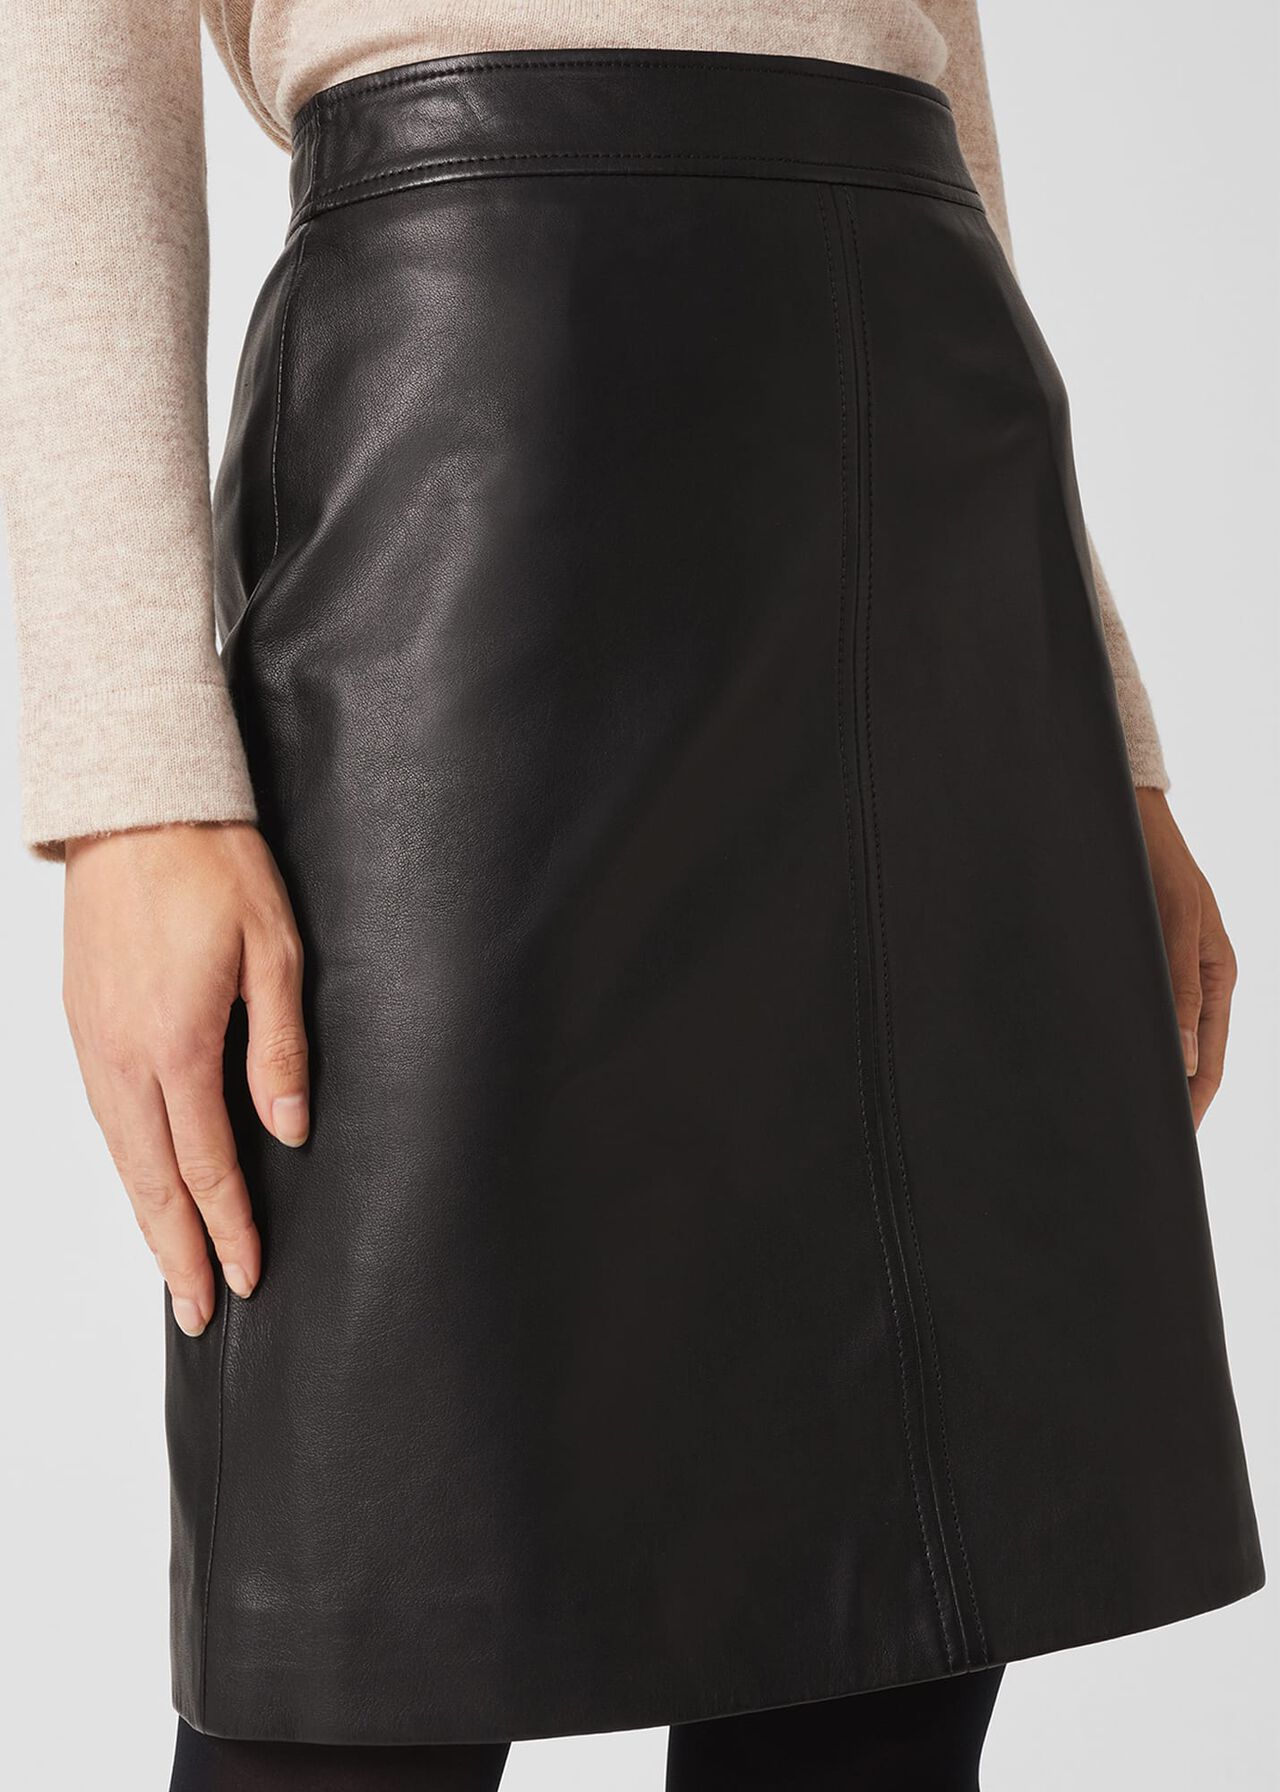 Annalise A Line Leather Skirt